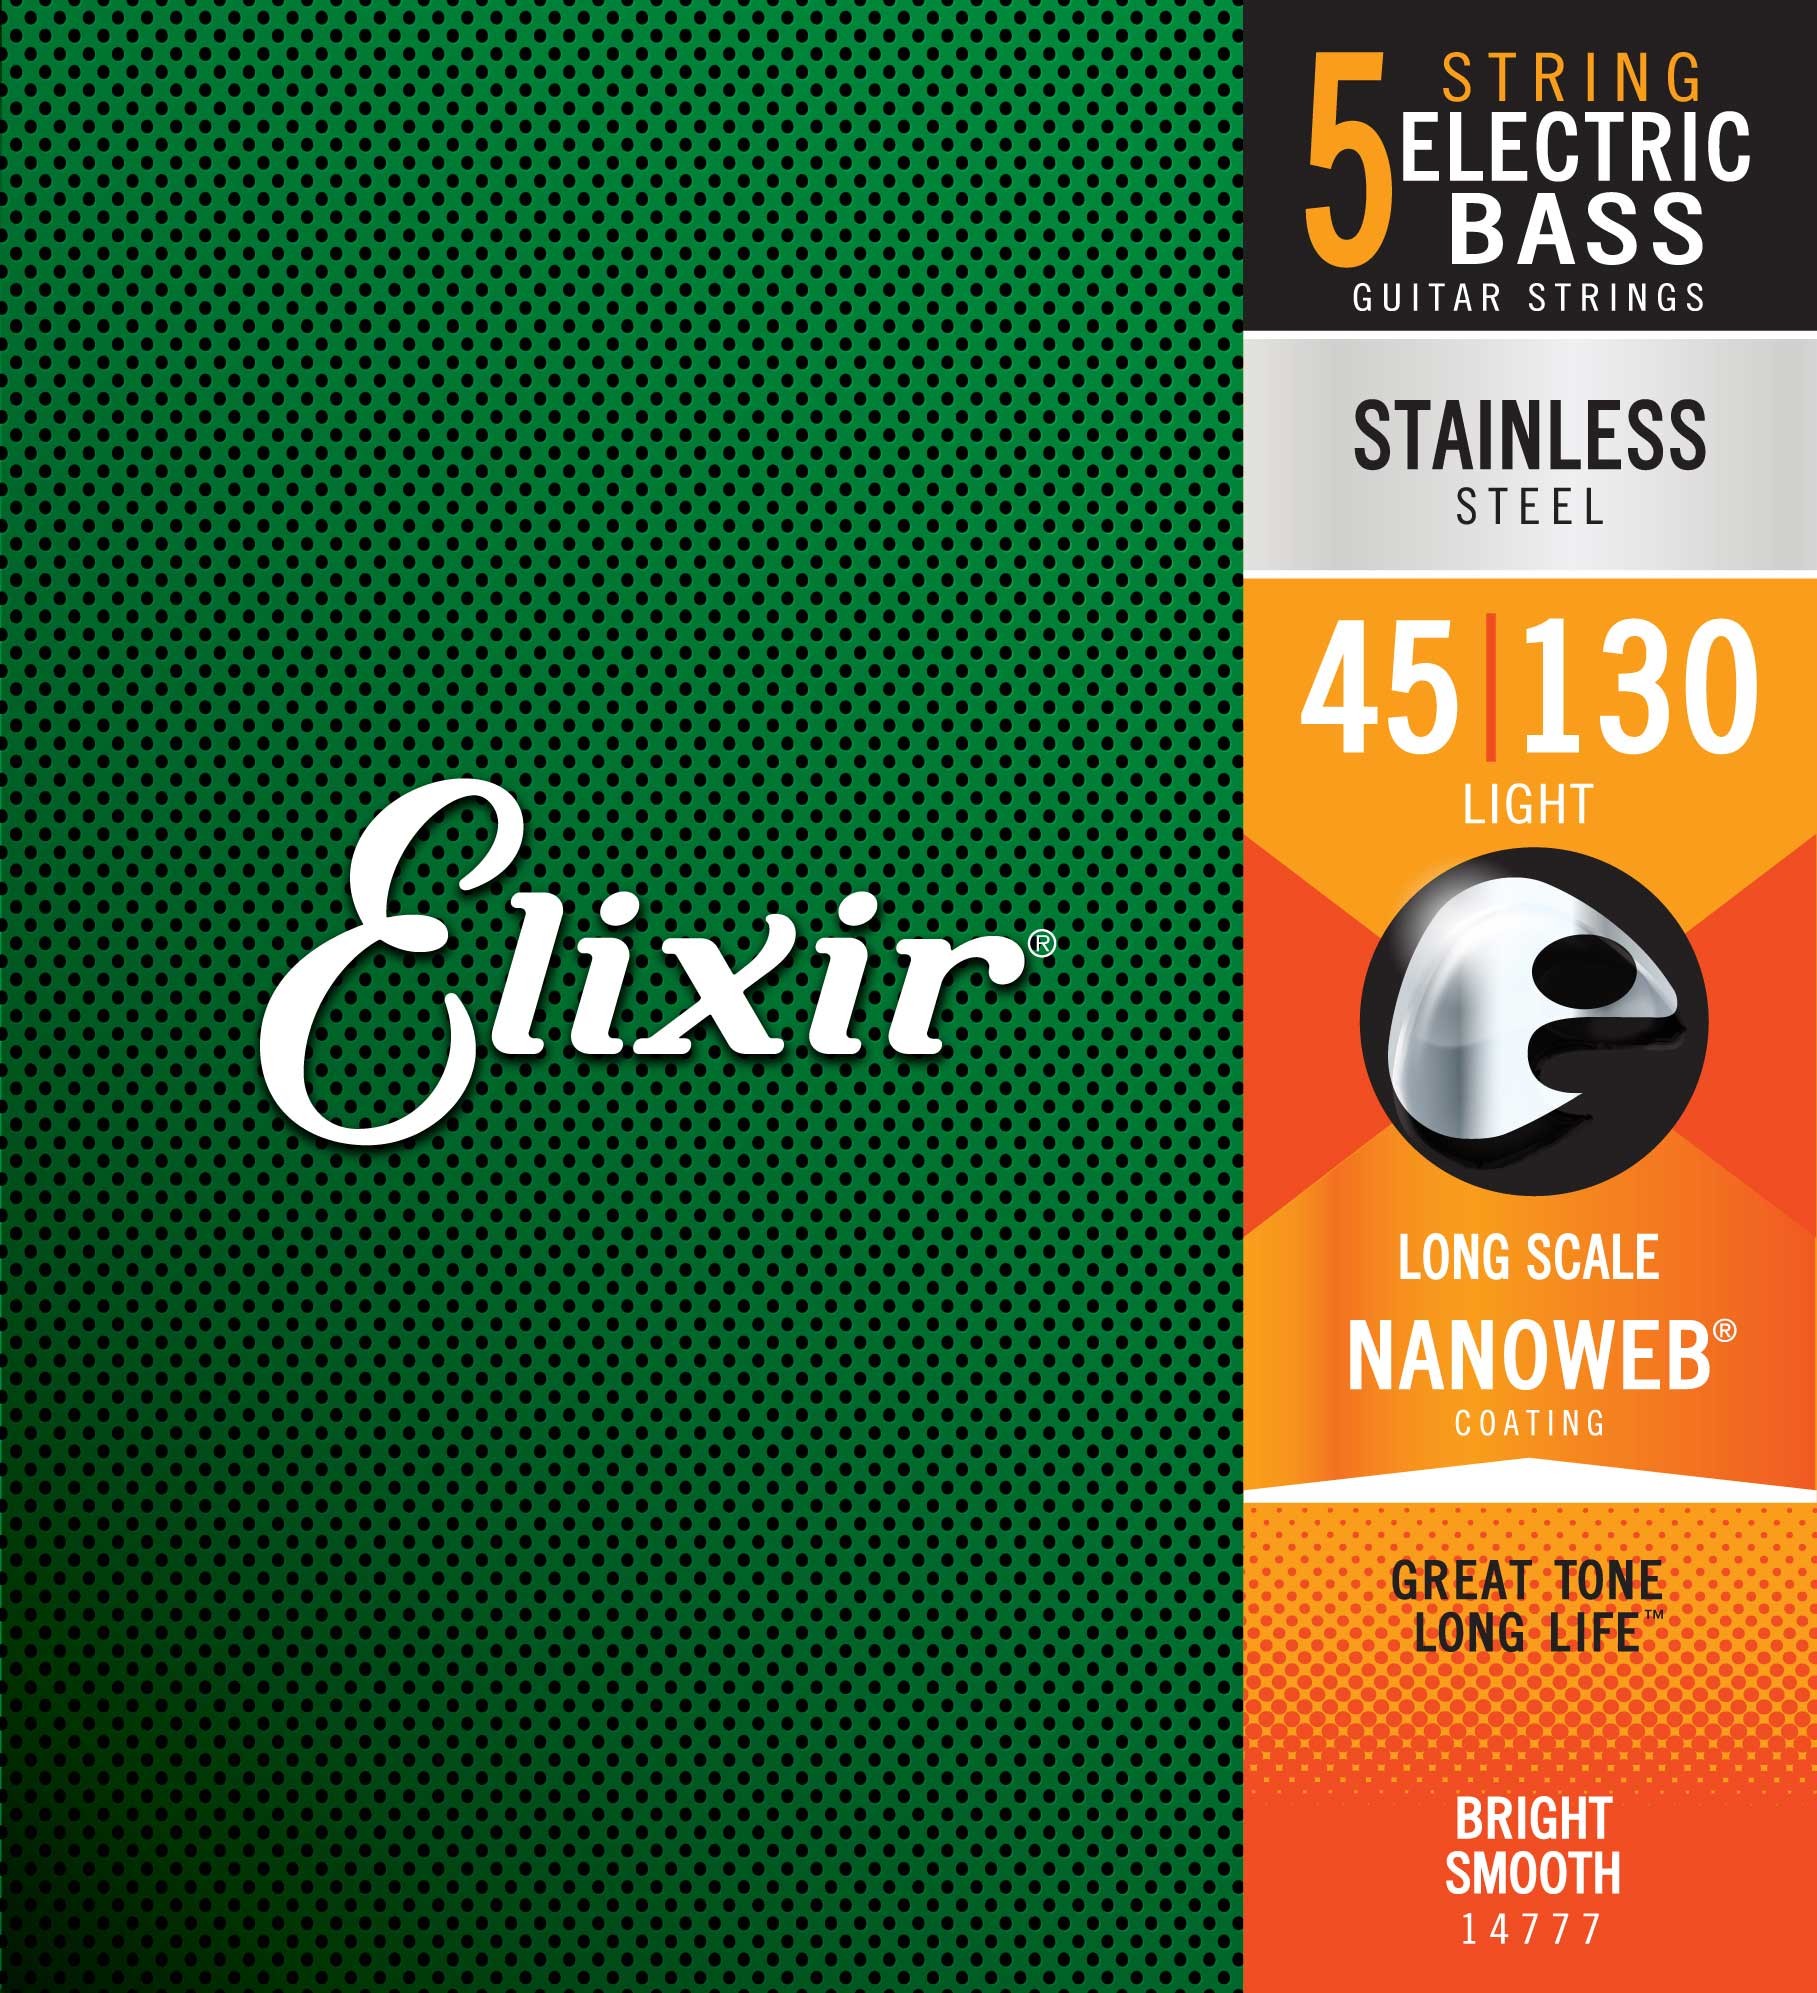 ELIXIR 14777 ELECTRIC BASS STAINLESS STEEL NANOWEB